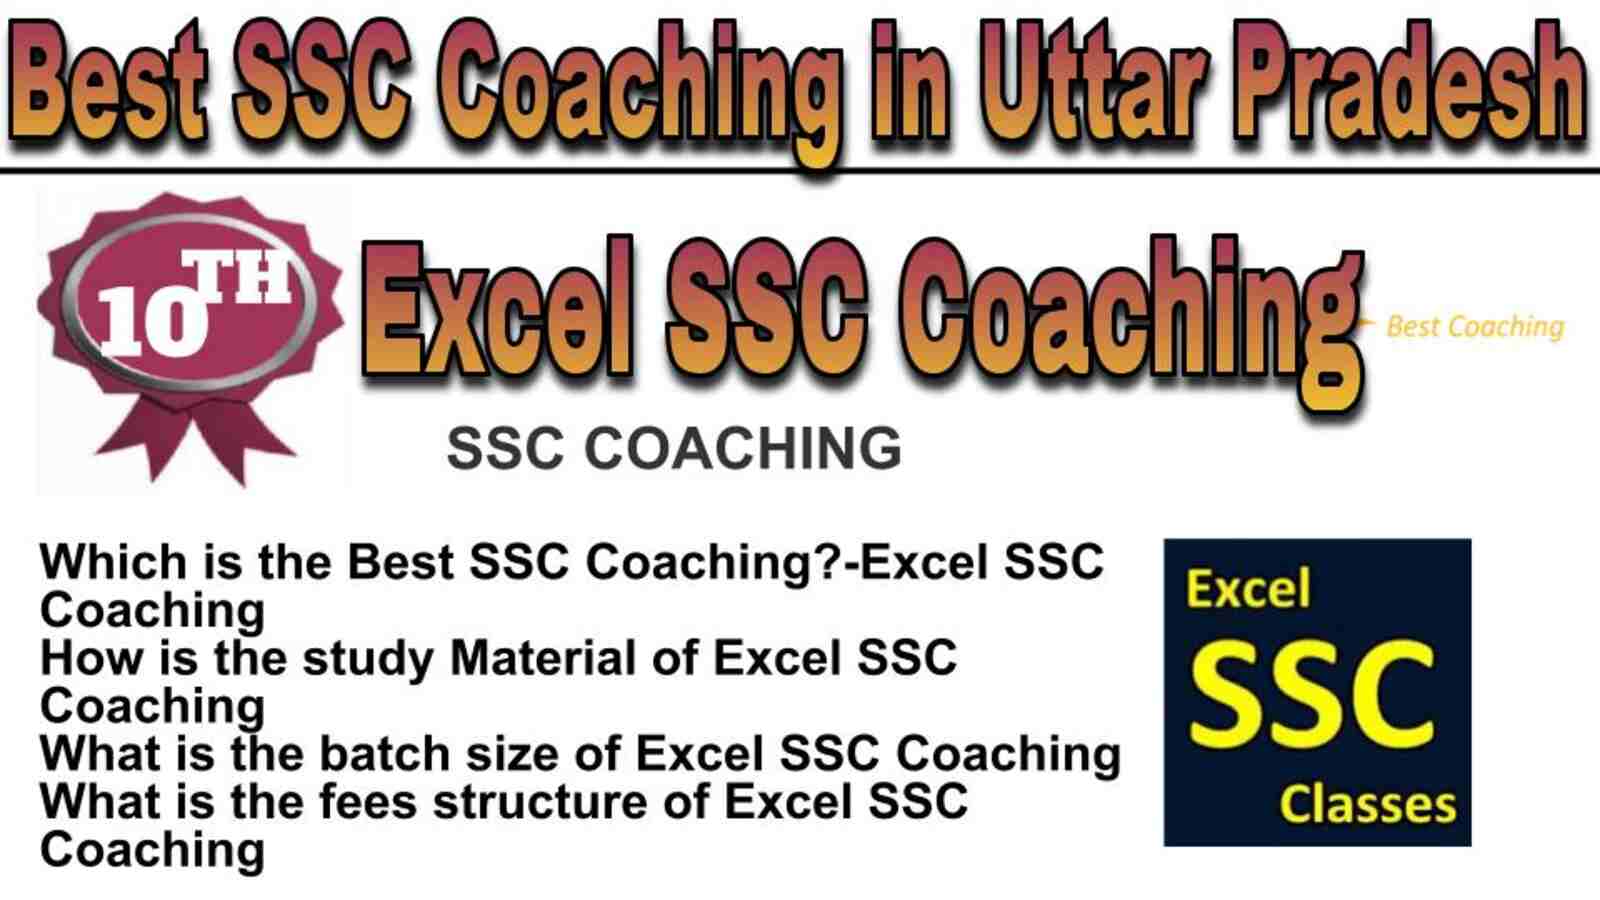 Rank 10 best SSC Coaching in Uttar Pradesh